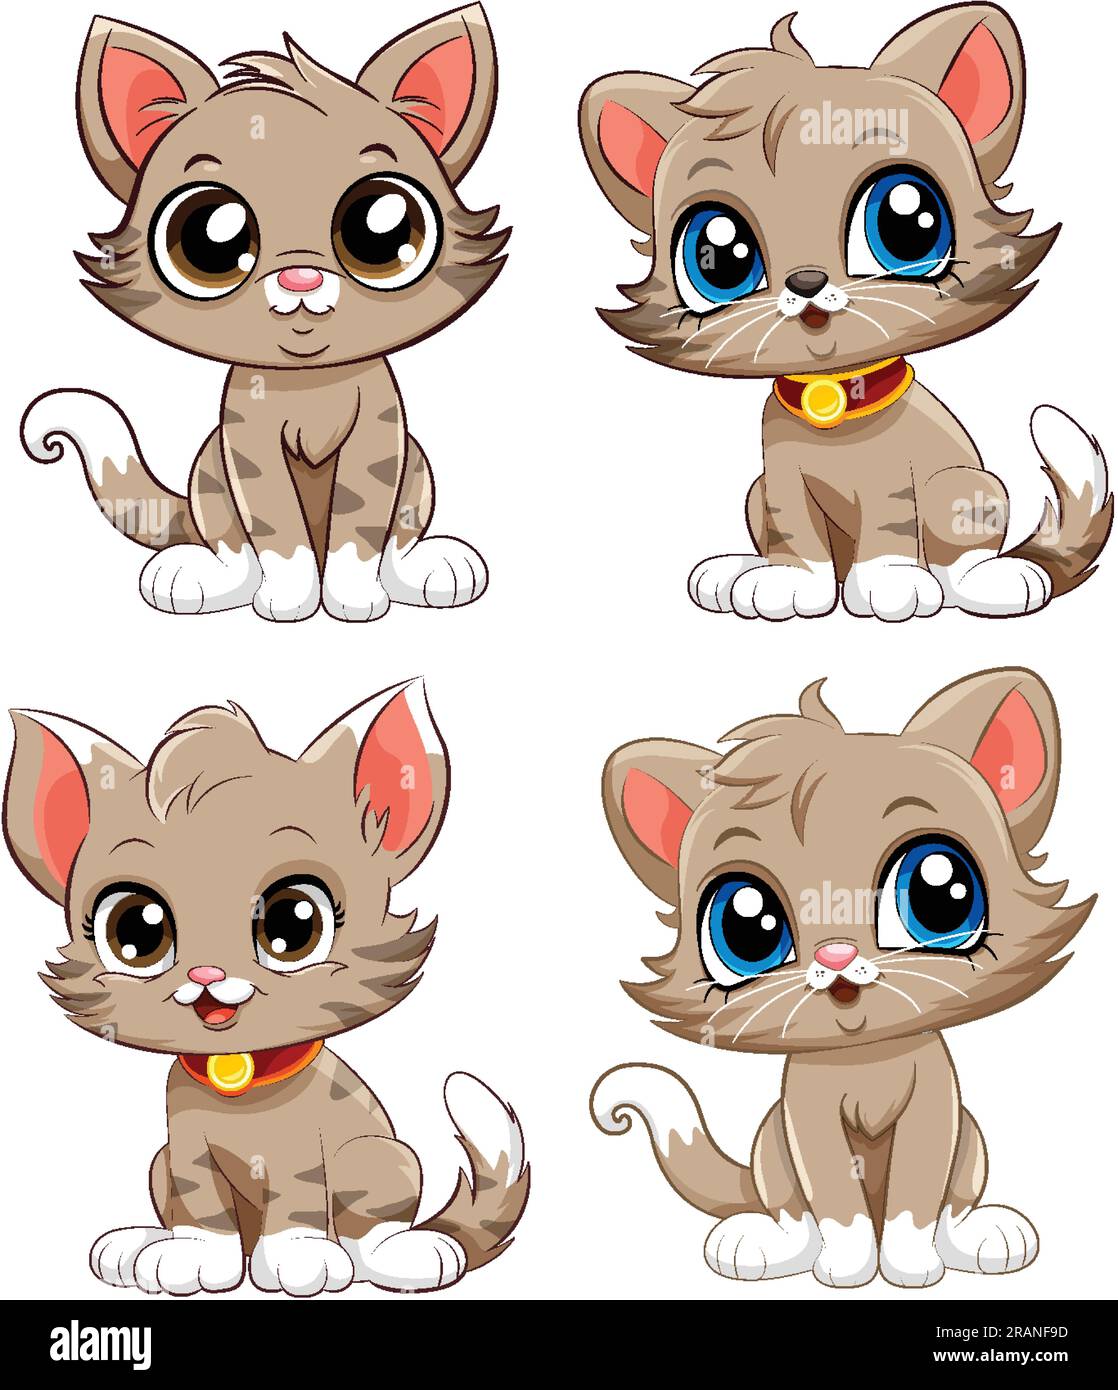 Cute Kittens Cartoon Characters Collection illustration Illustration de Vecteur